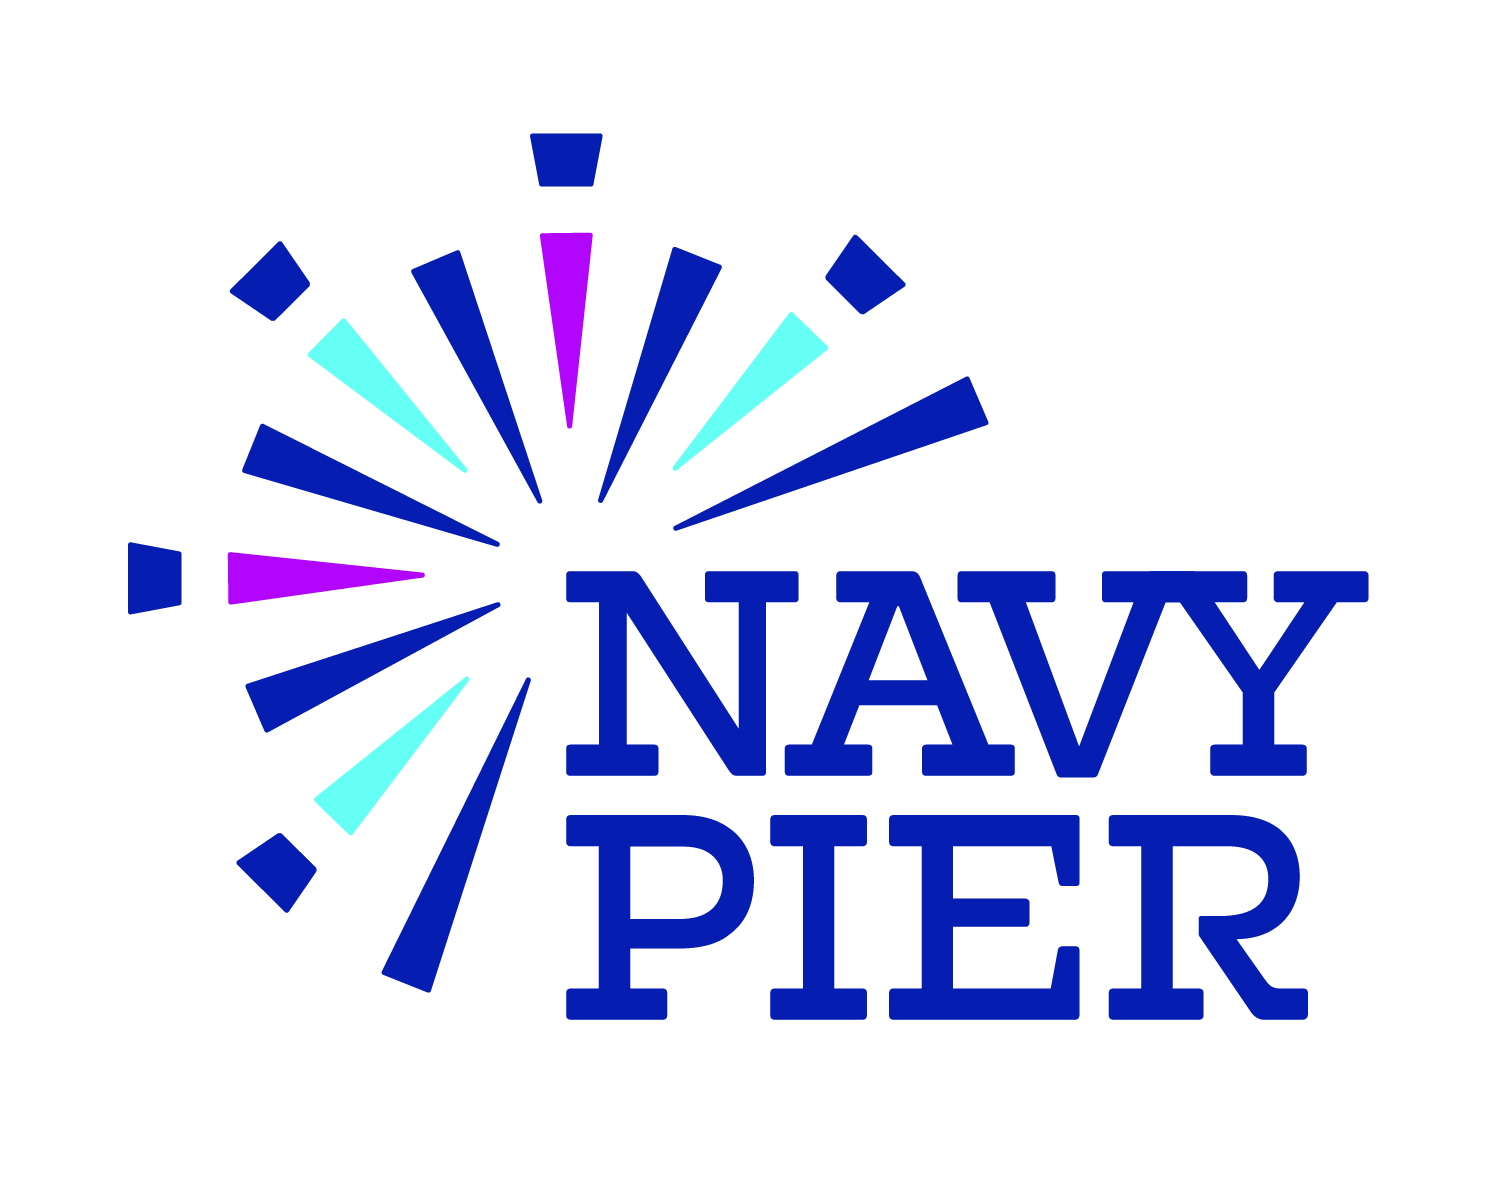 Navy Pier